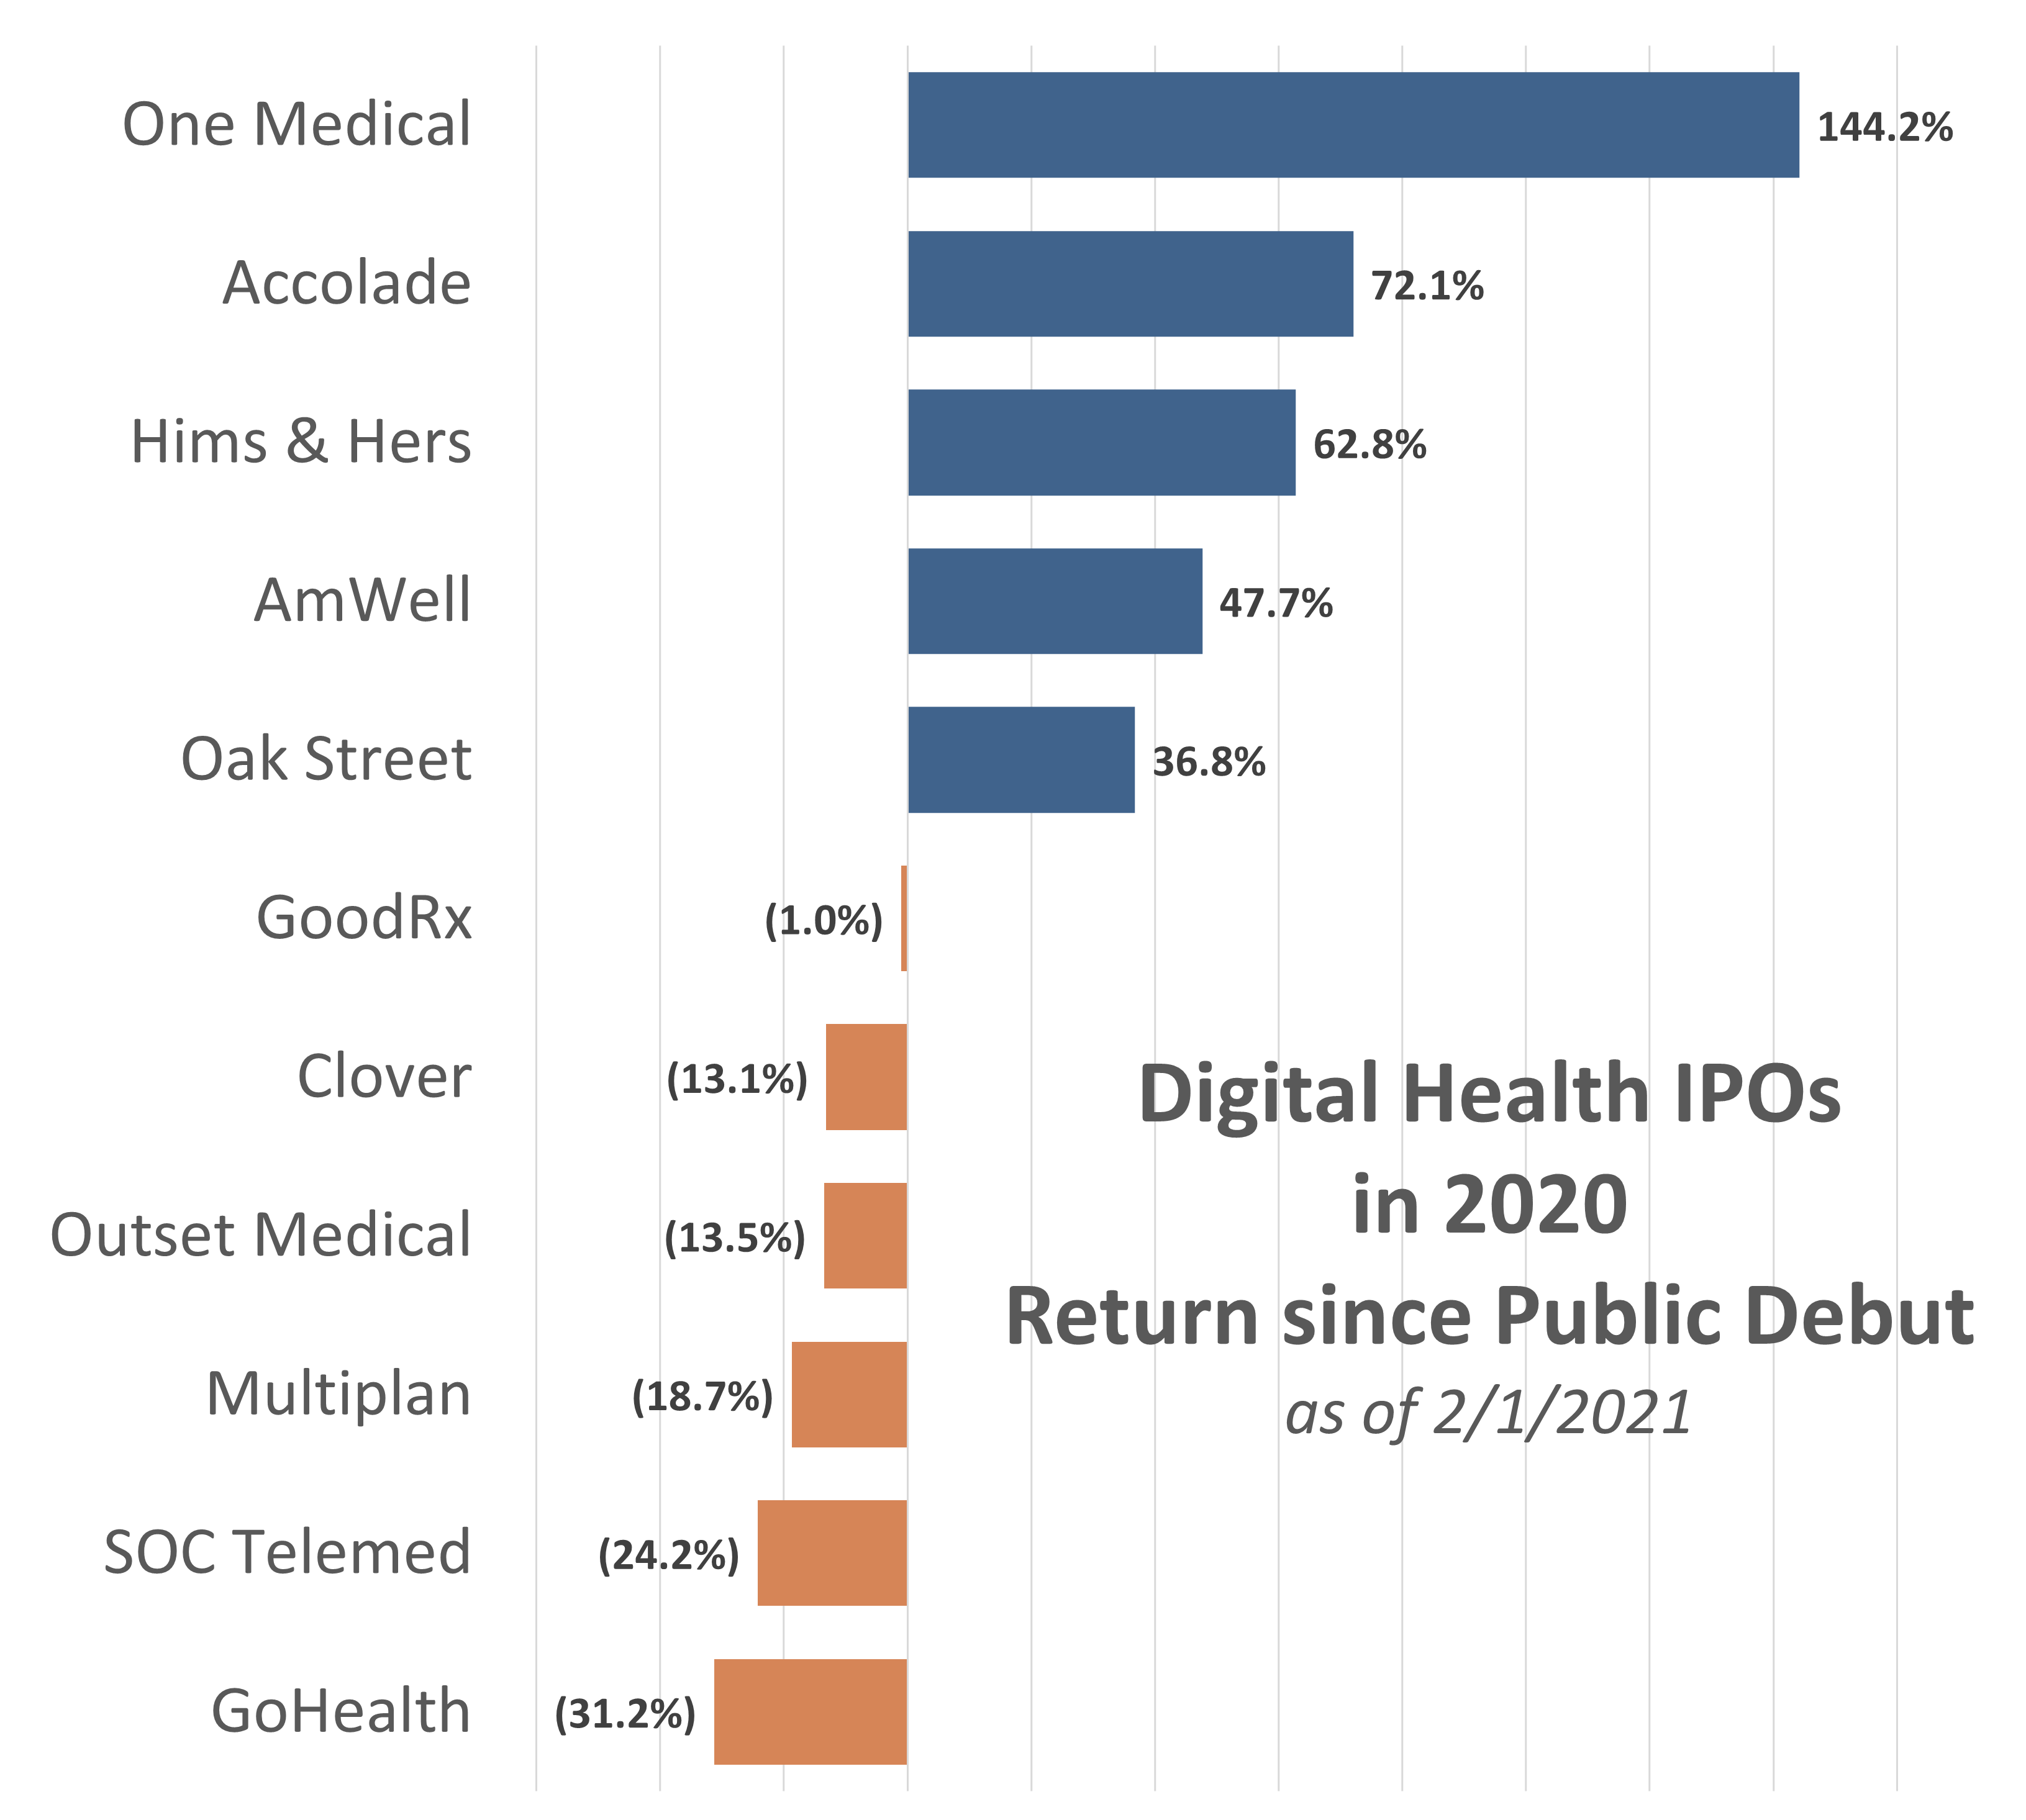 digital health IPO in 2020